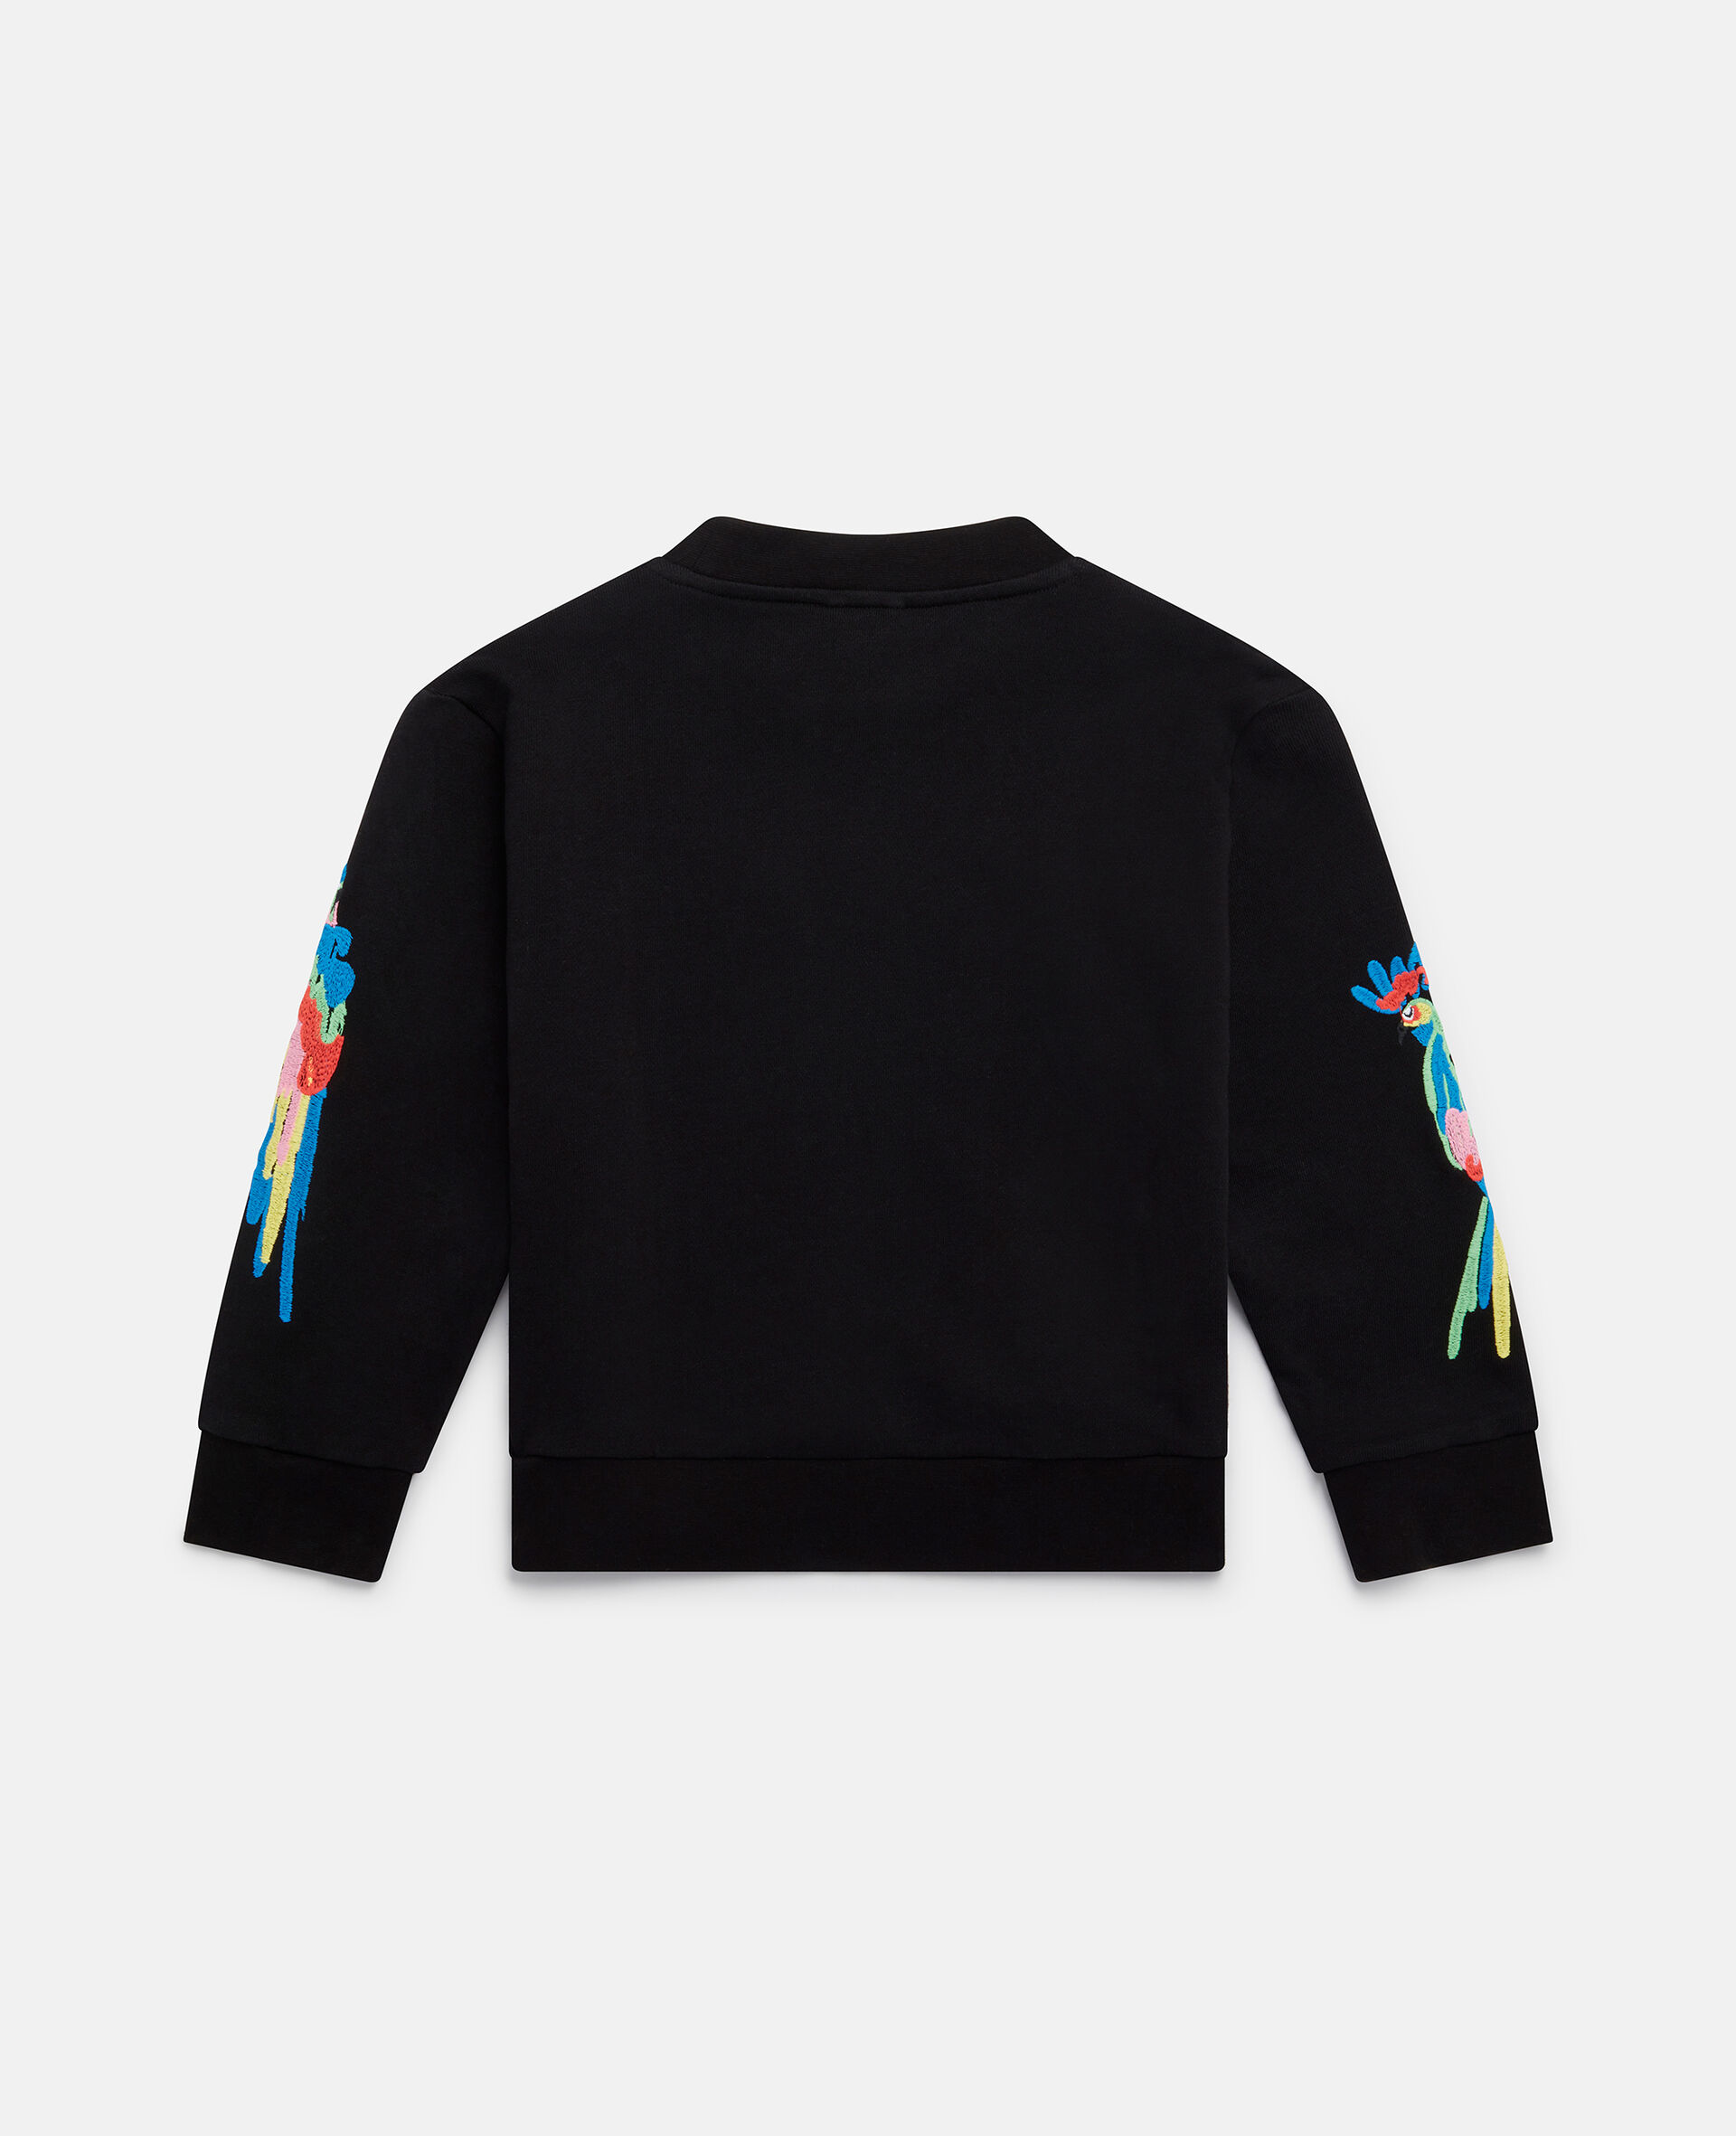 Parrot Embroidery Sweatshirt-Black-large image number 2